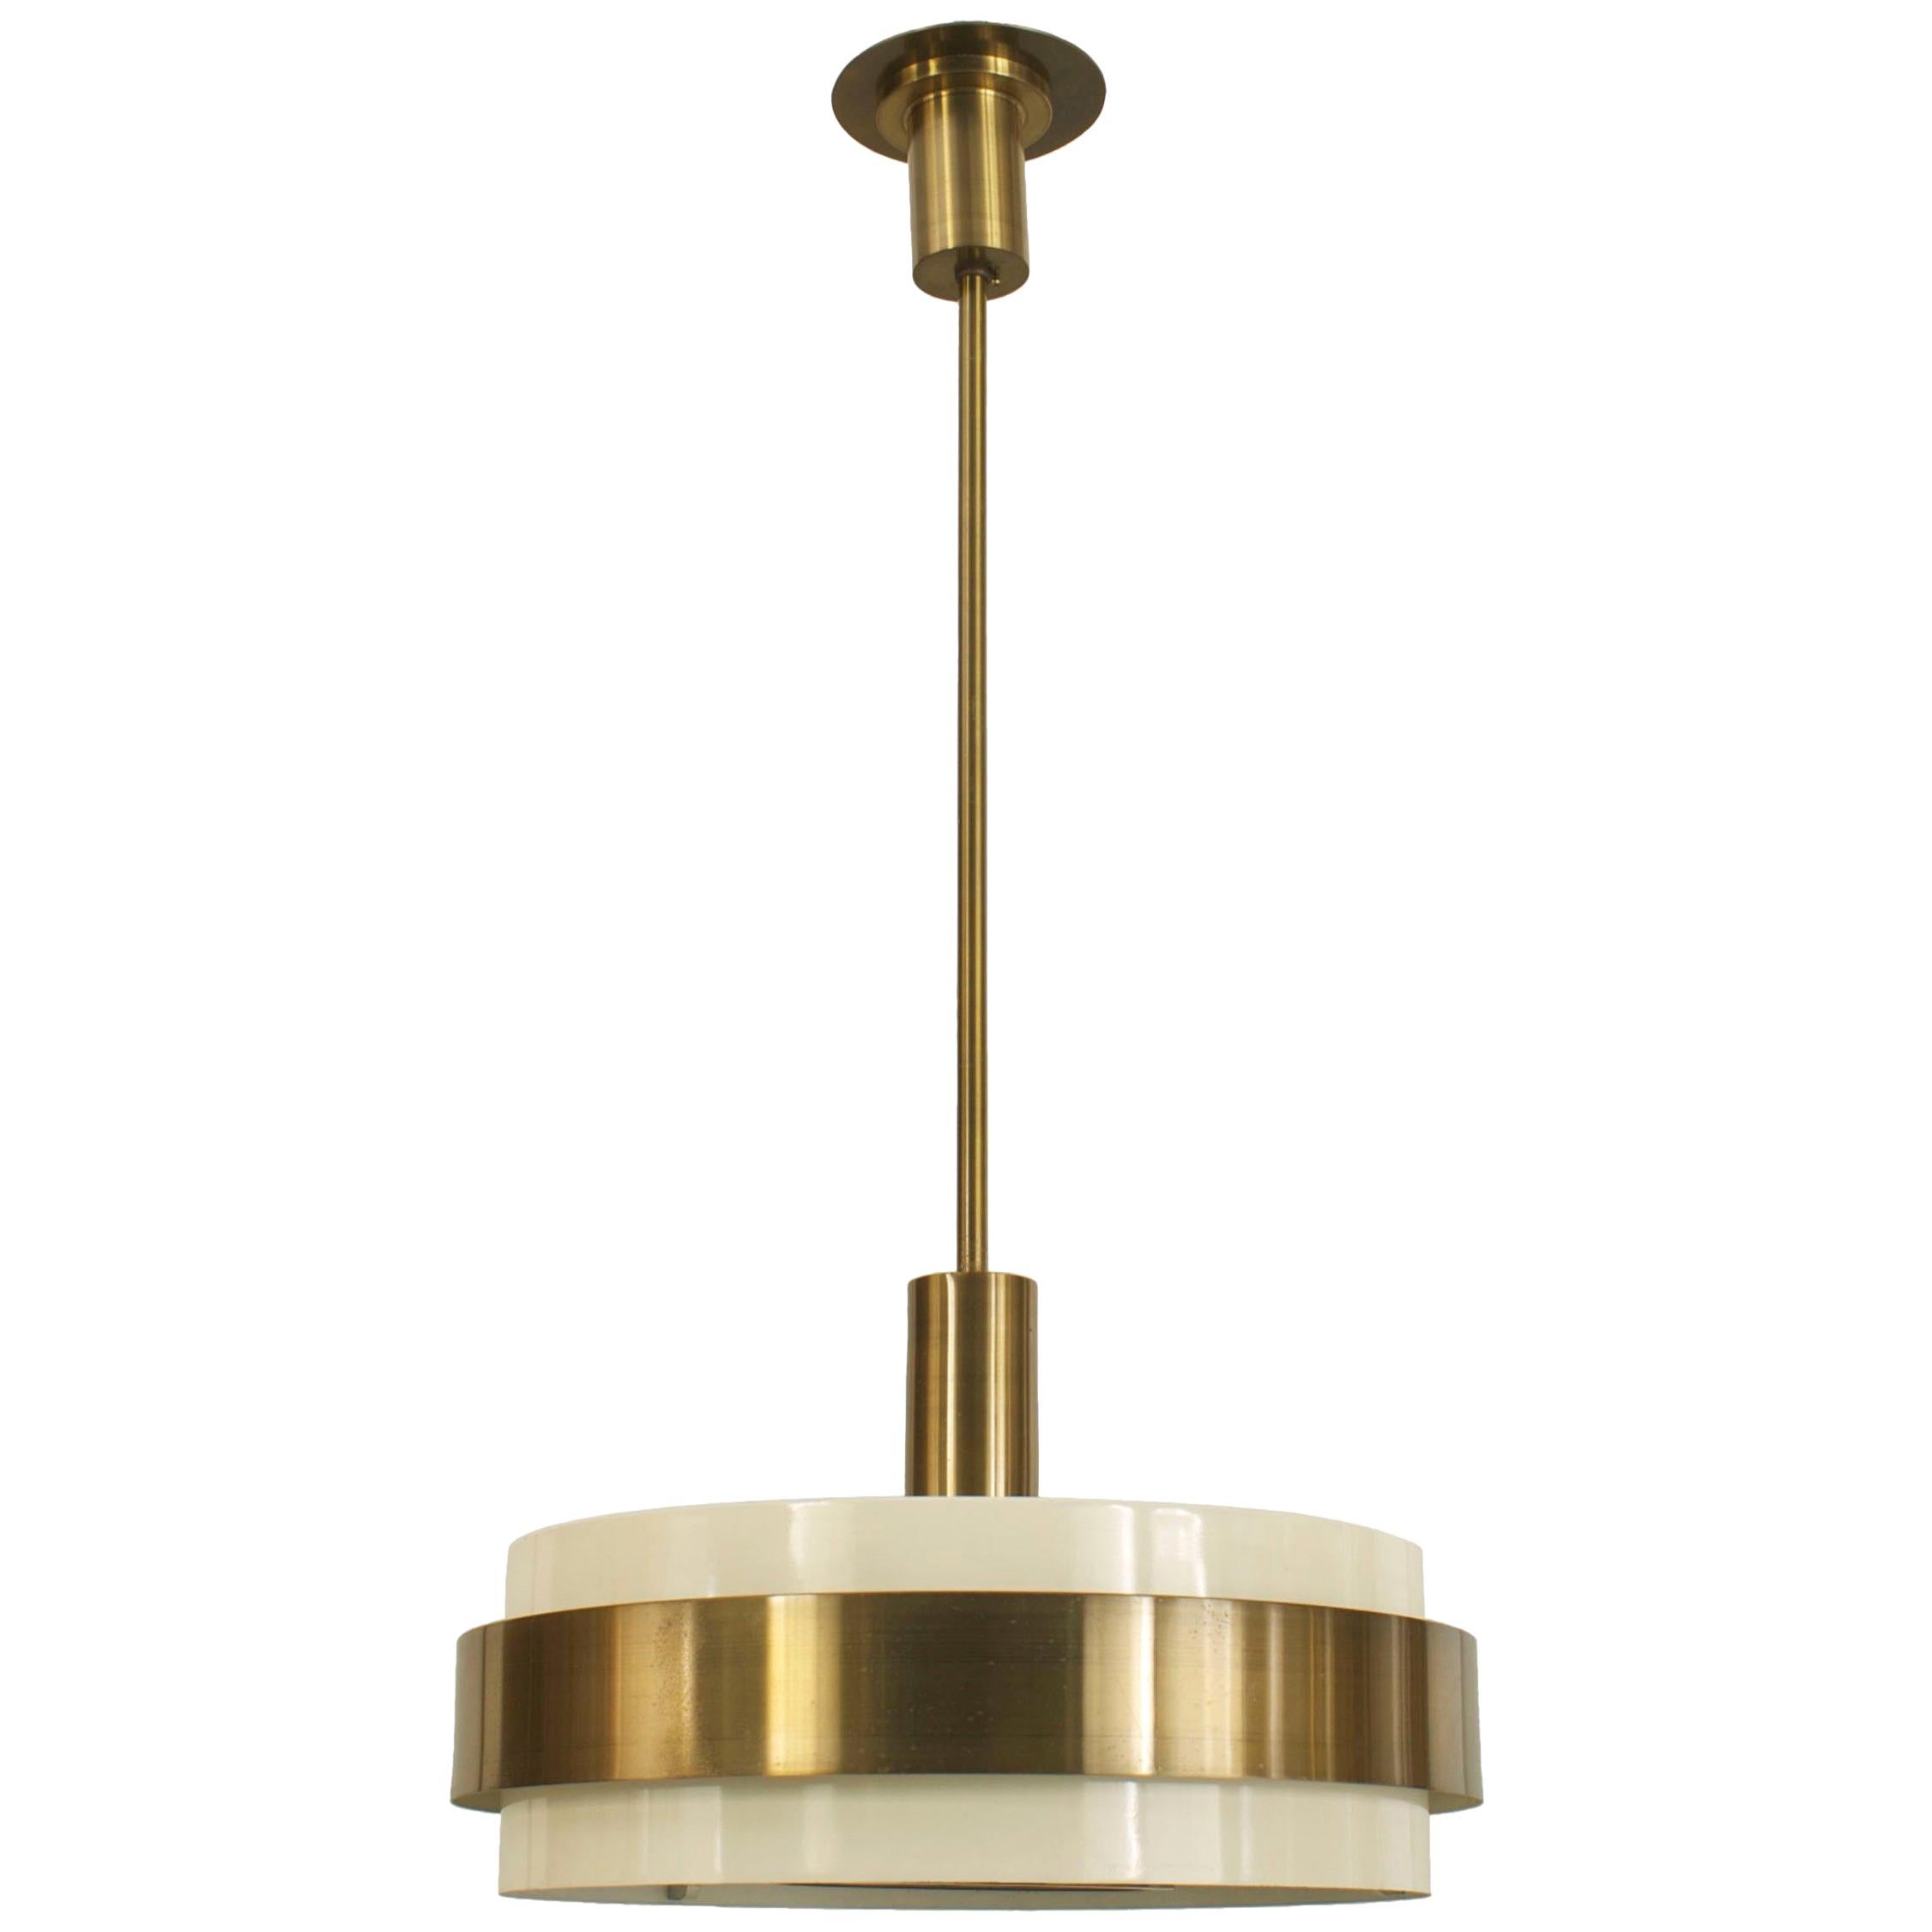 French Art Deco Perzel Beige Metal and Brass Lantern